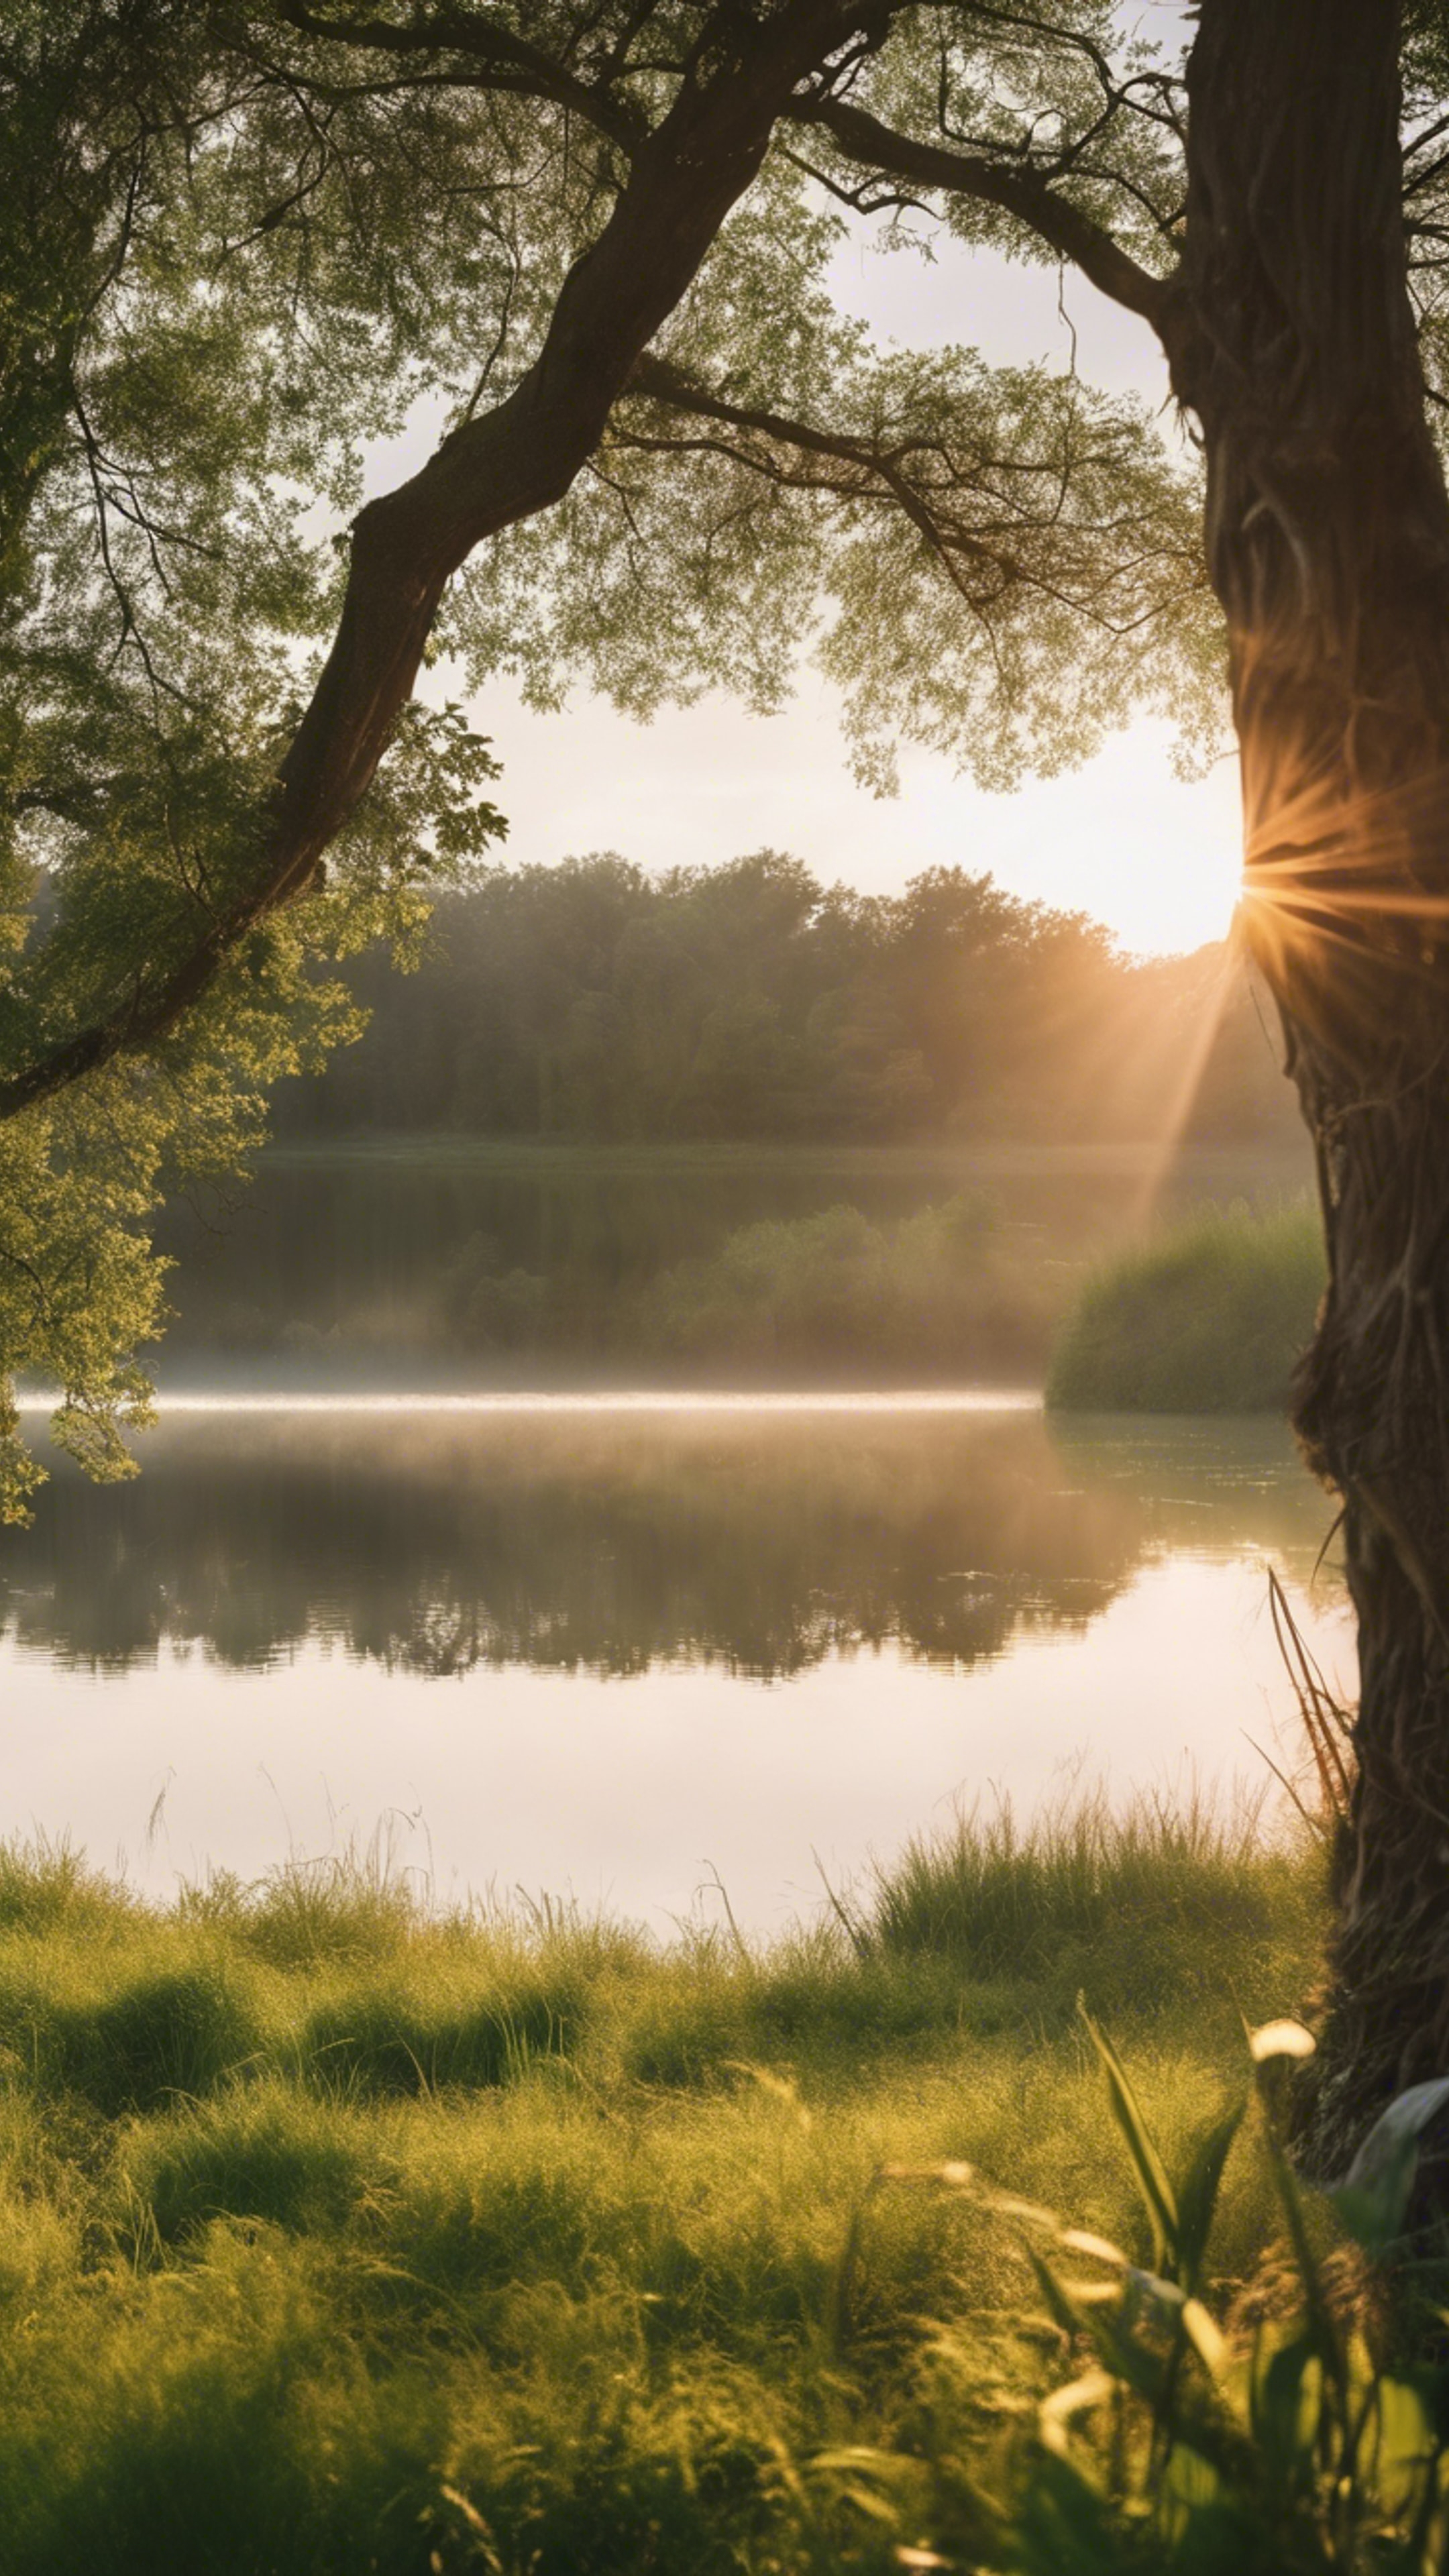 A beautiful sunrise reflecting off a serene lake, enveloped by lush green meadows.壁紙[3fcd1b5f237347a583b1]